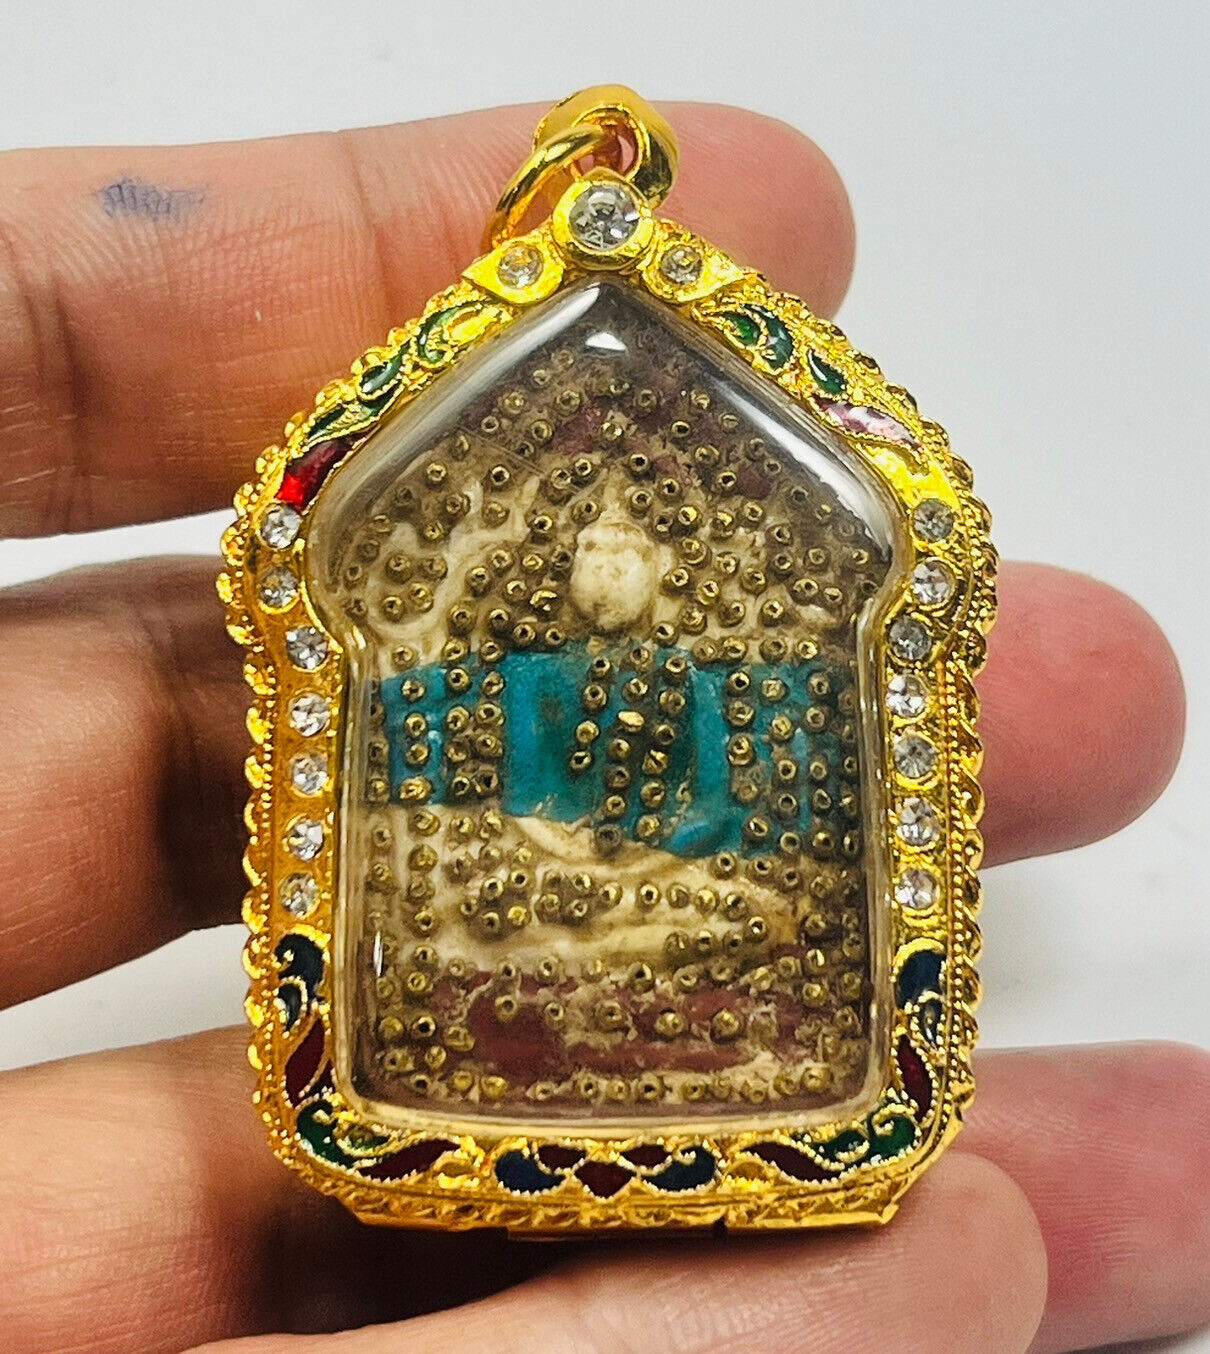 Khunpaen Prai Kuman Lp tim embed gold takrut charm love attraction wealth amulet